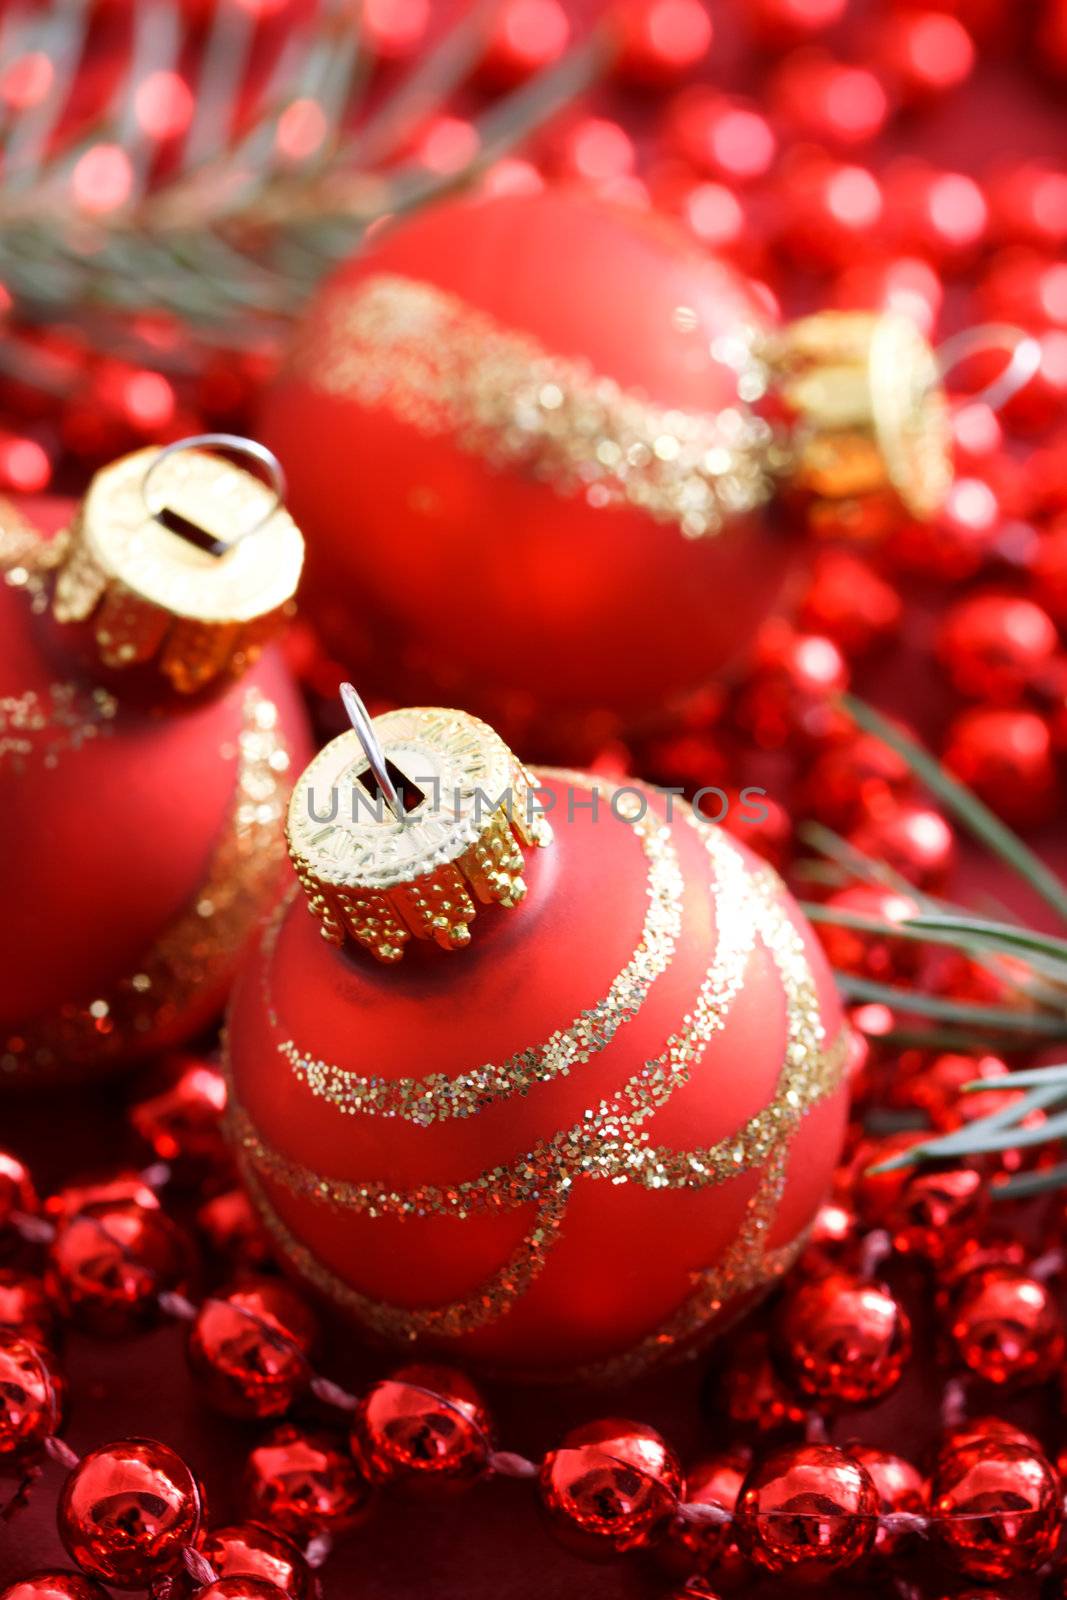  Red Christmas ornaments by melpomene